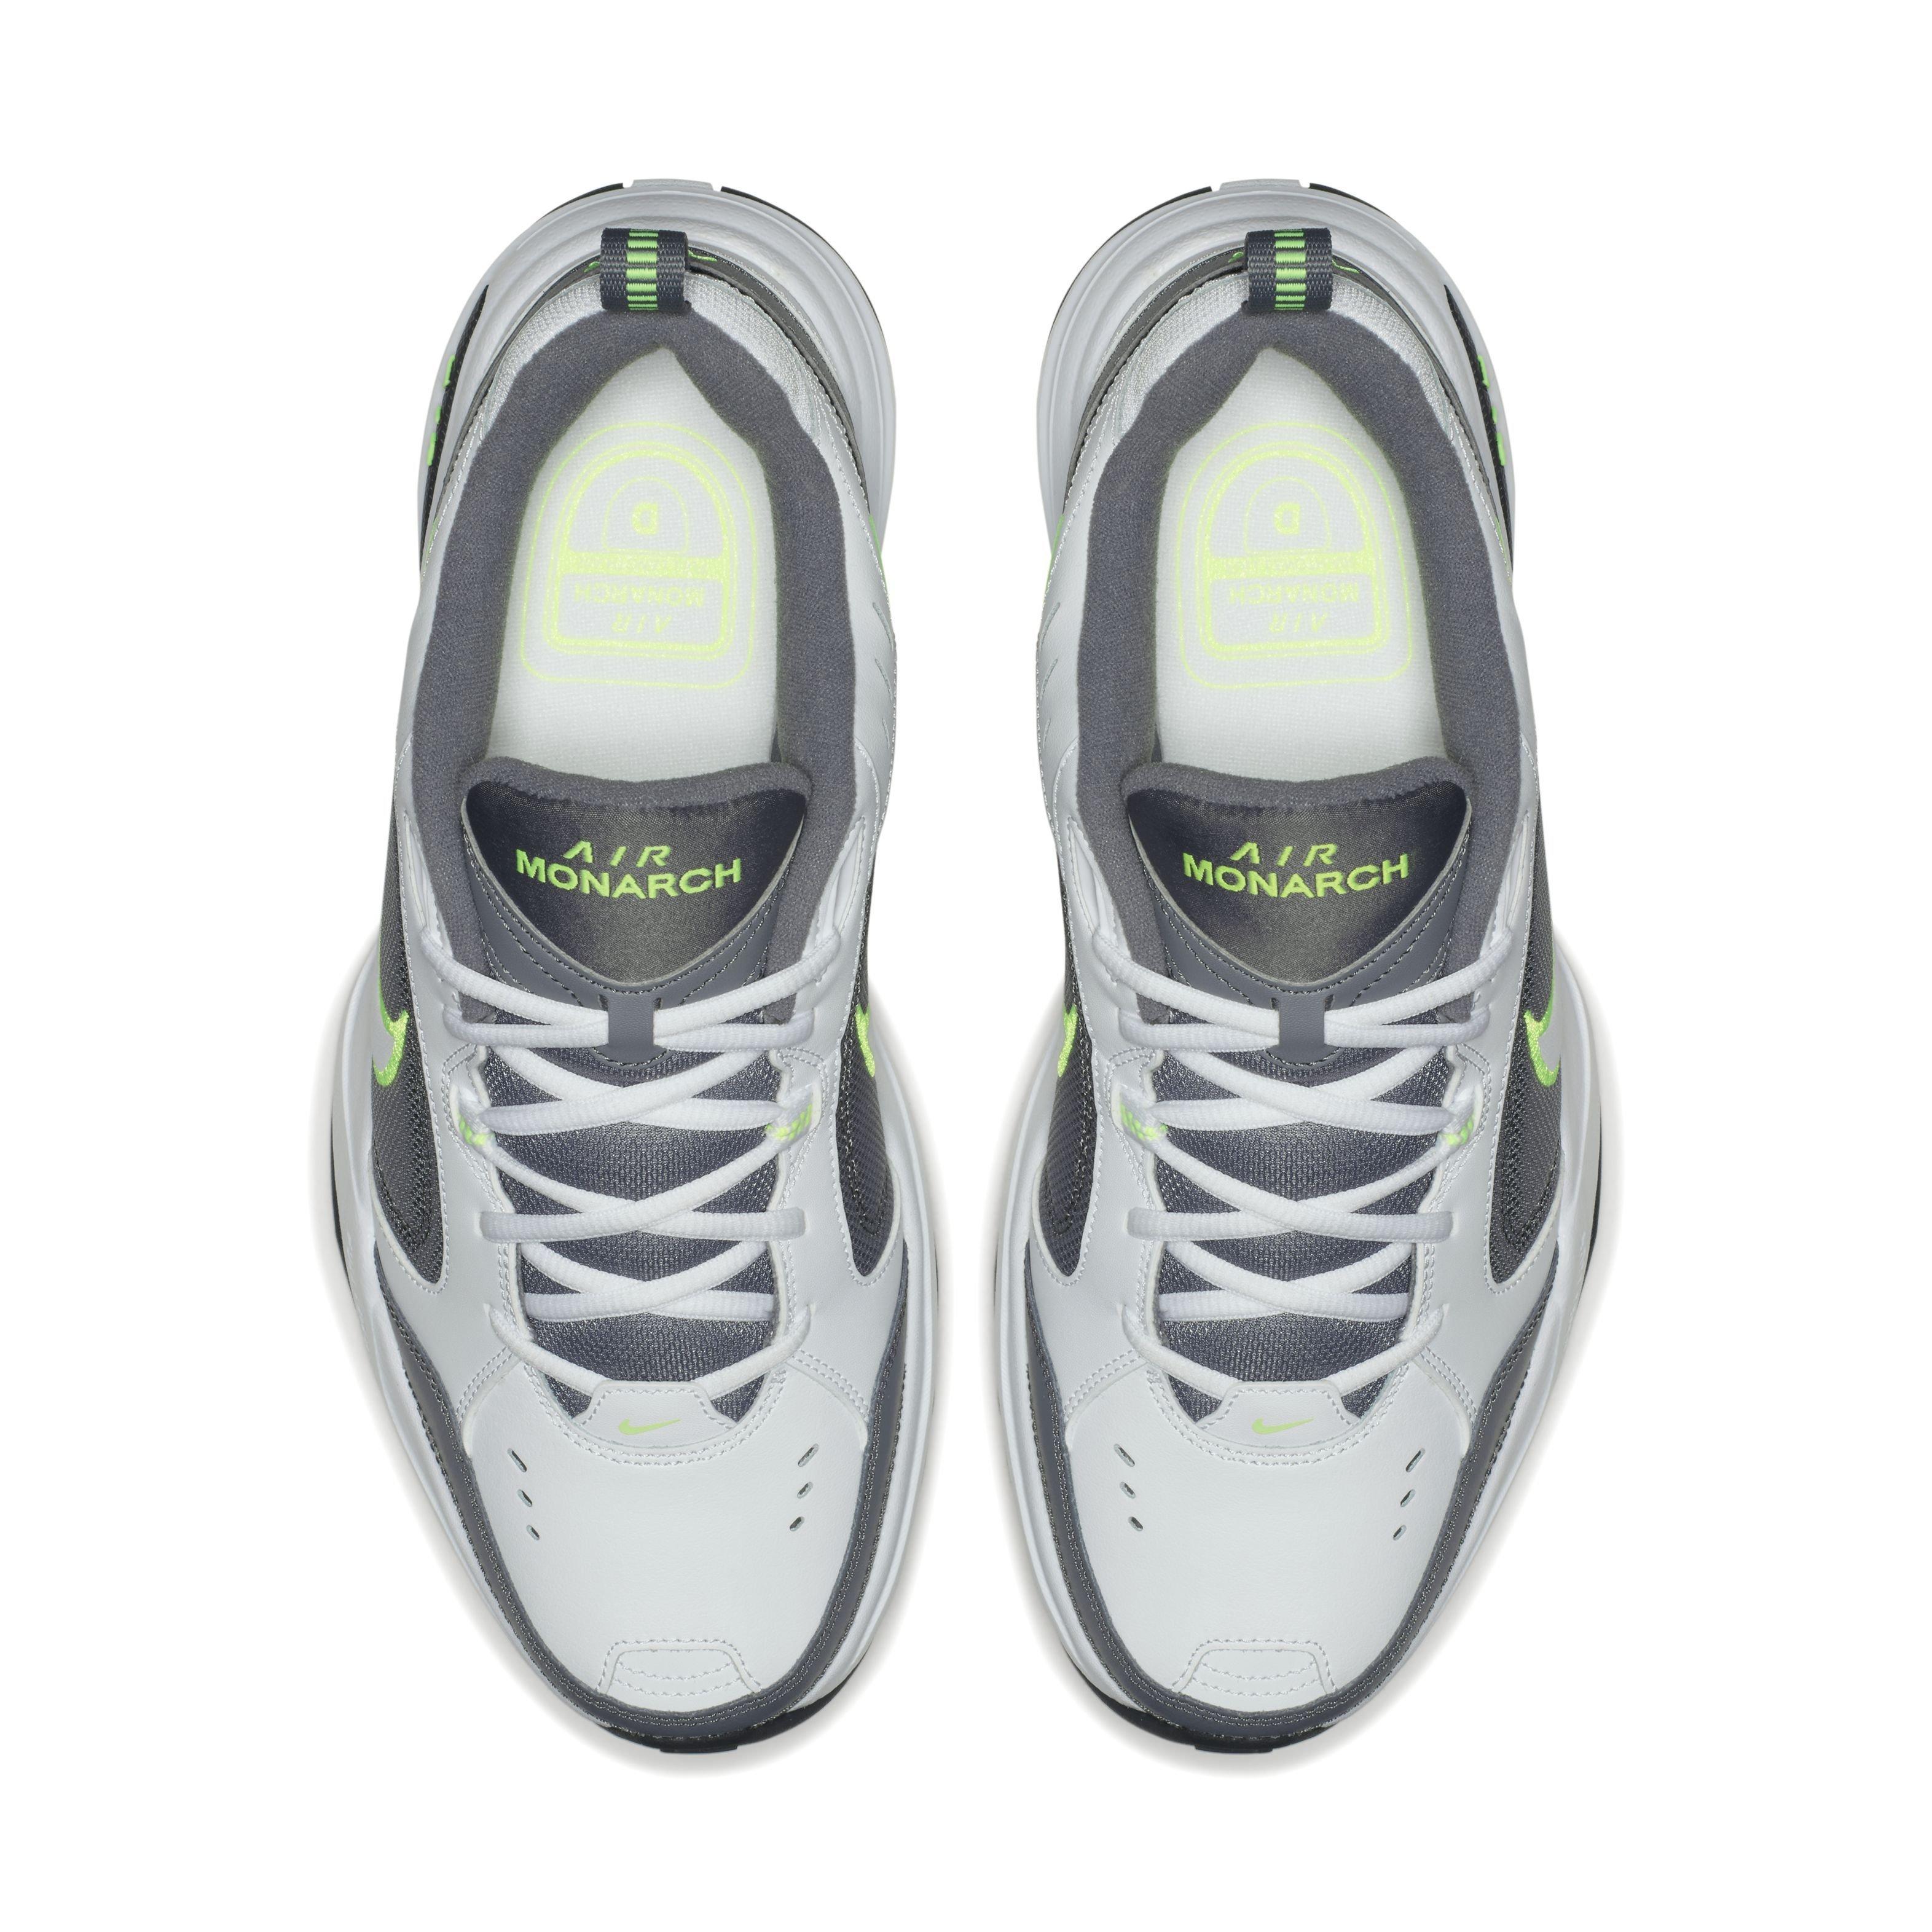 Fascinate minus Gentage sig Nike Air Monarch IV "White/White/Cool Grey/Anthracite" Men's Shoe